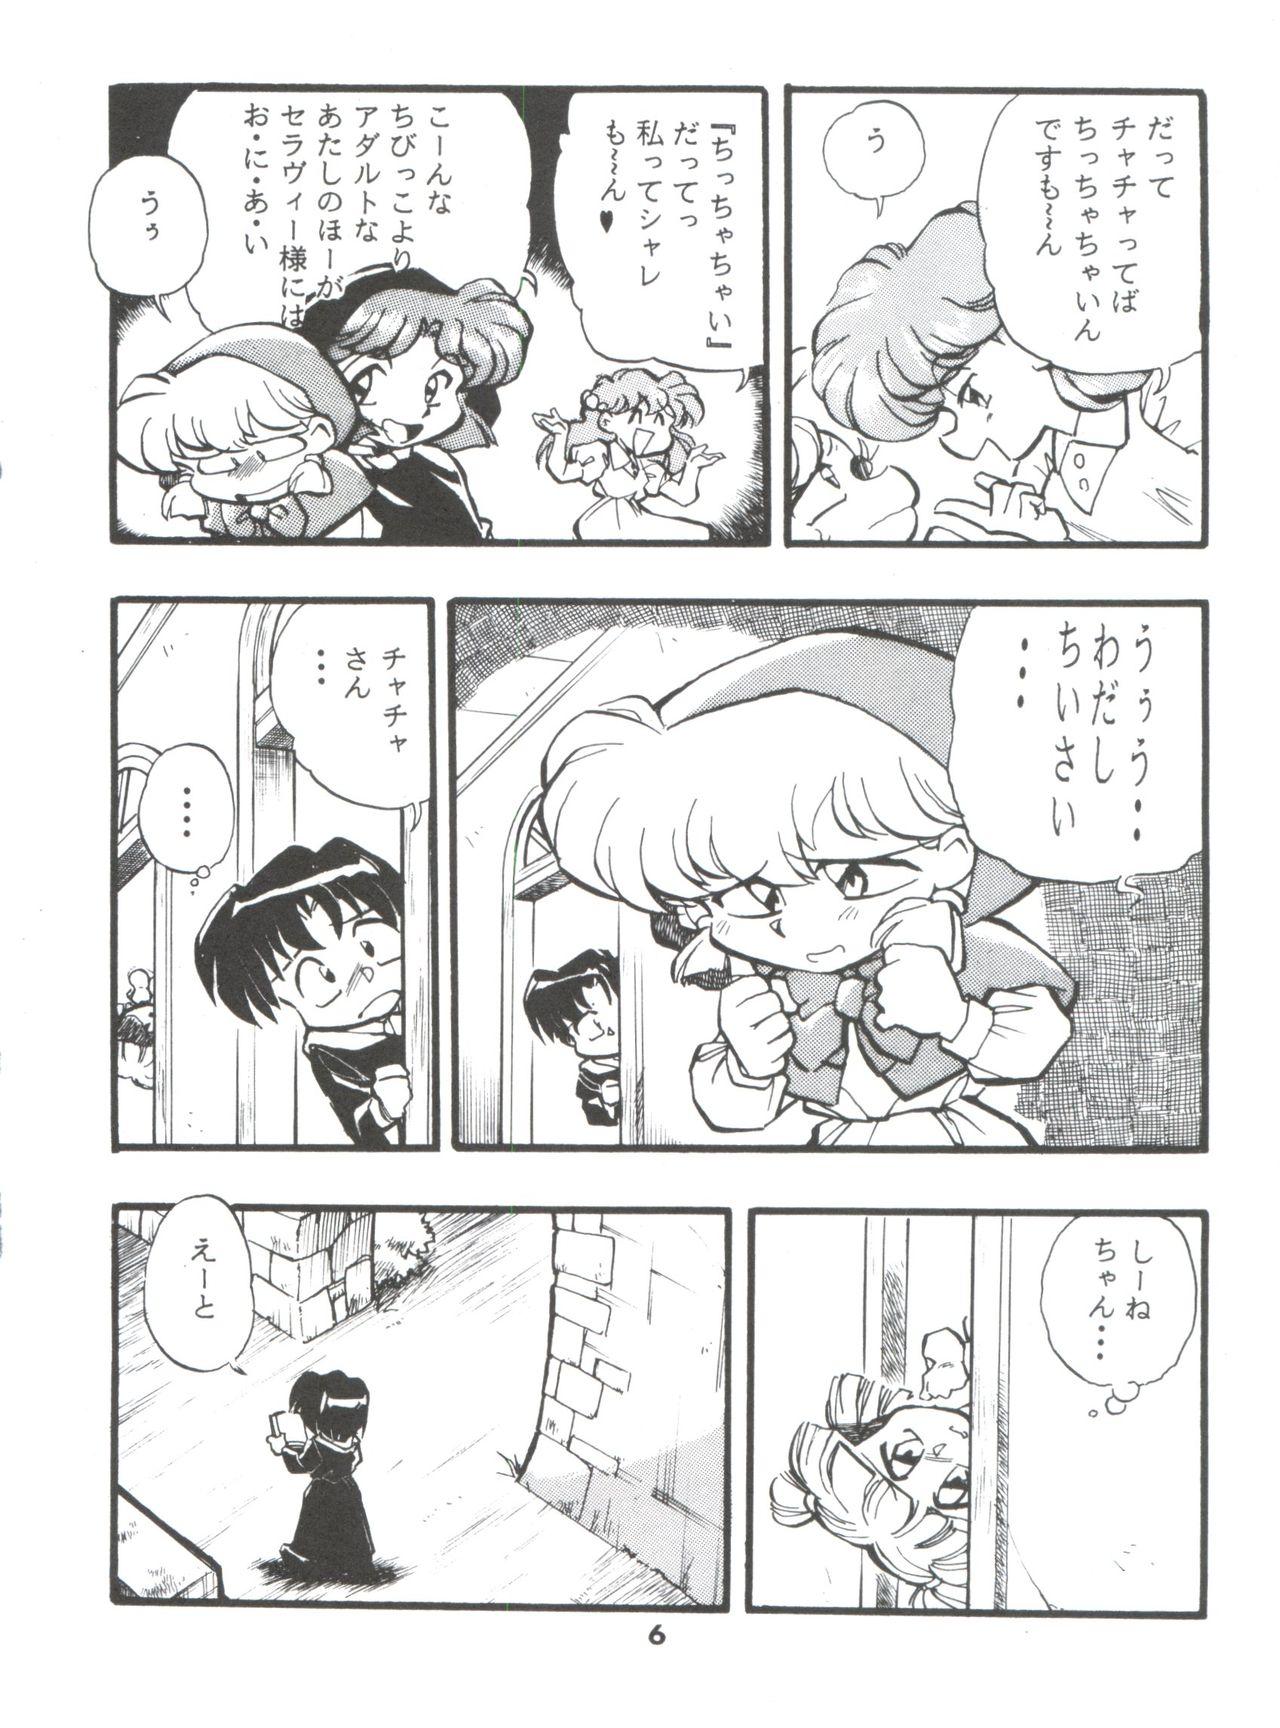 Farting DK-1 III - Akazukin cha cha Lesbians - Page 6